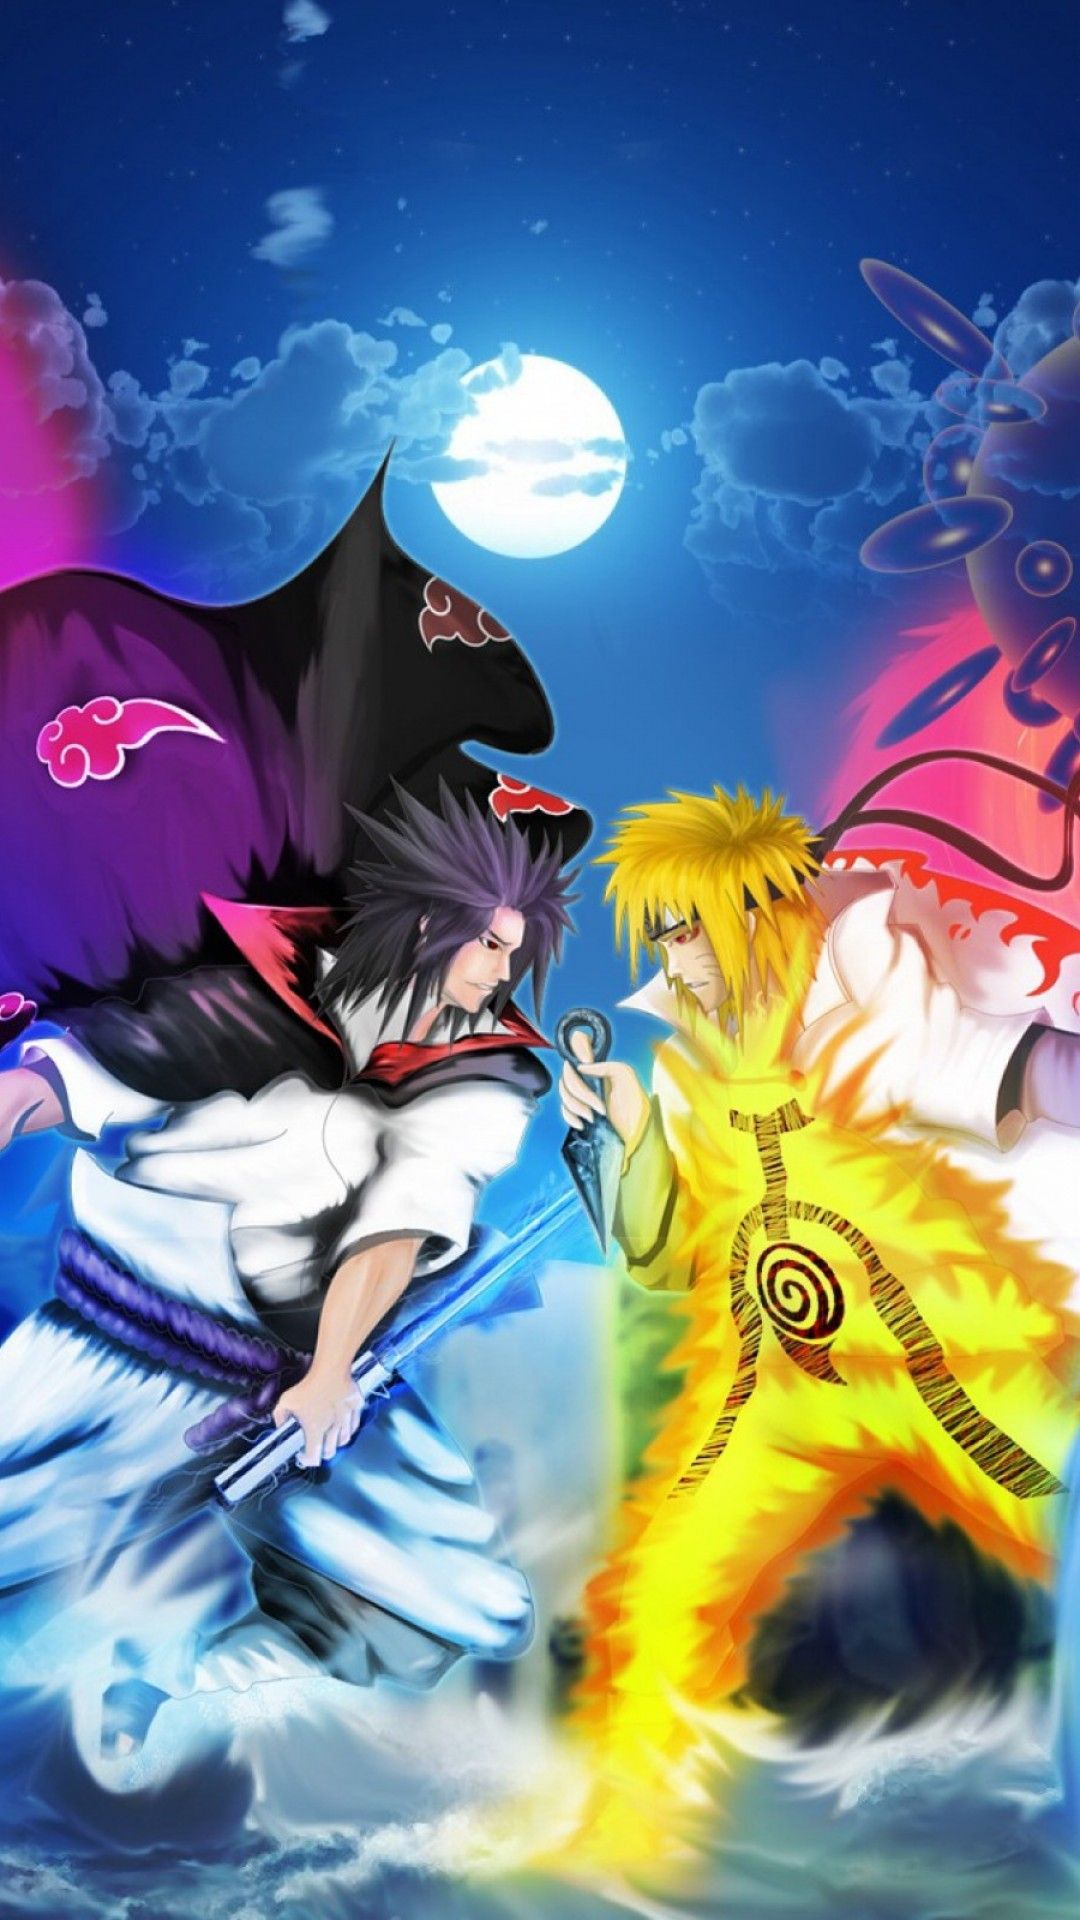 Wallpaper ID 352739  Anime Naruto Phone Wallpaper Sasuke Uchiha  1080x2460 free download